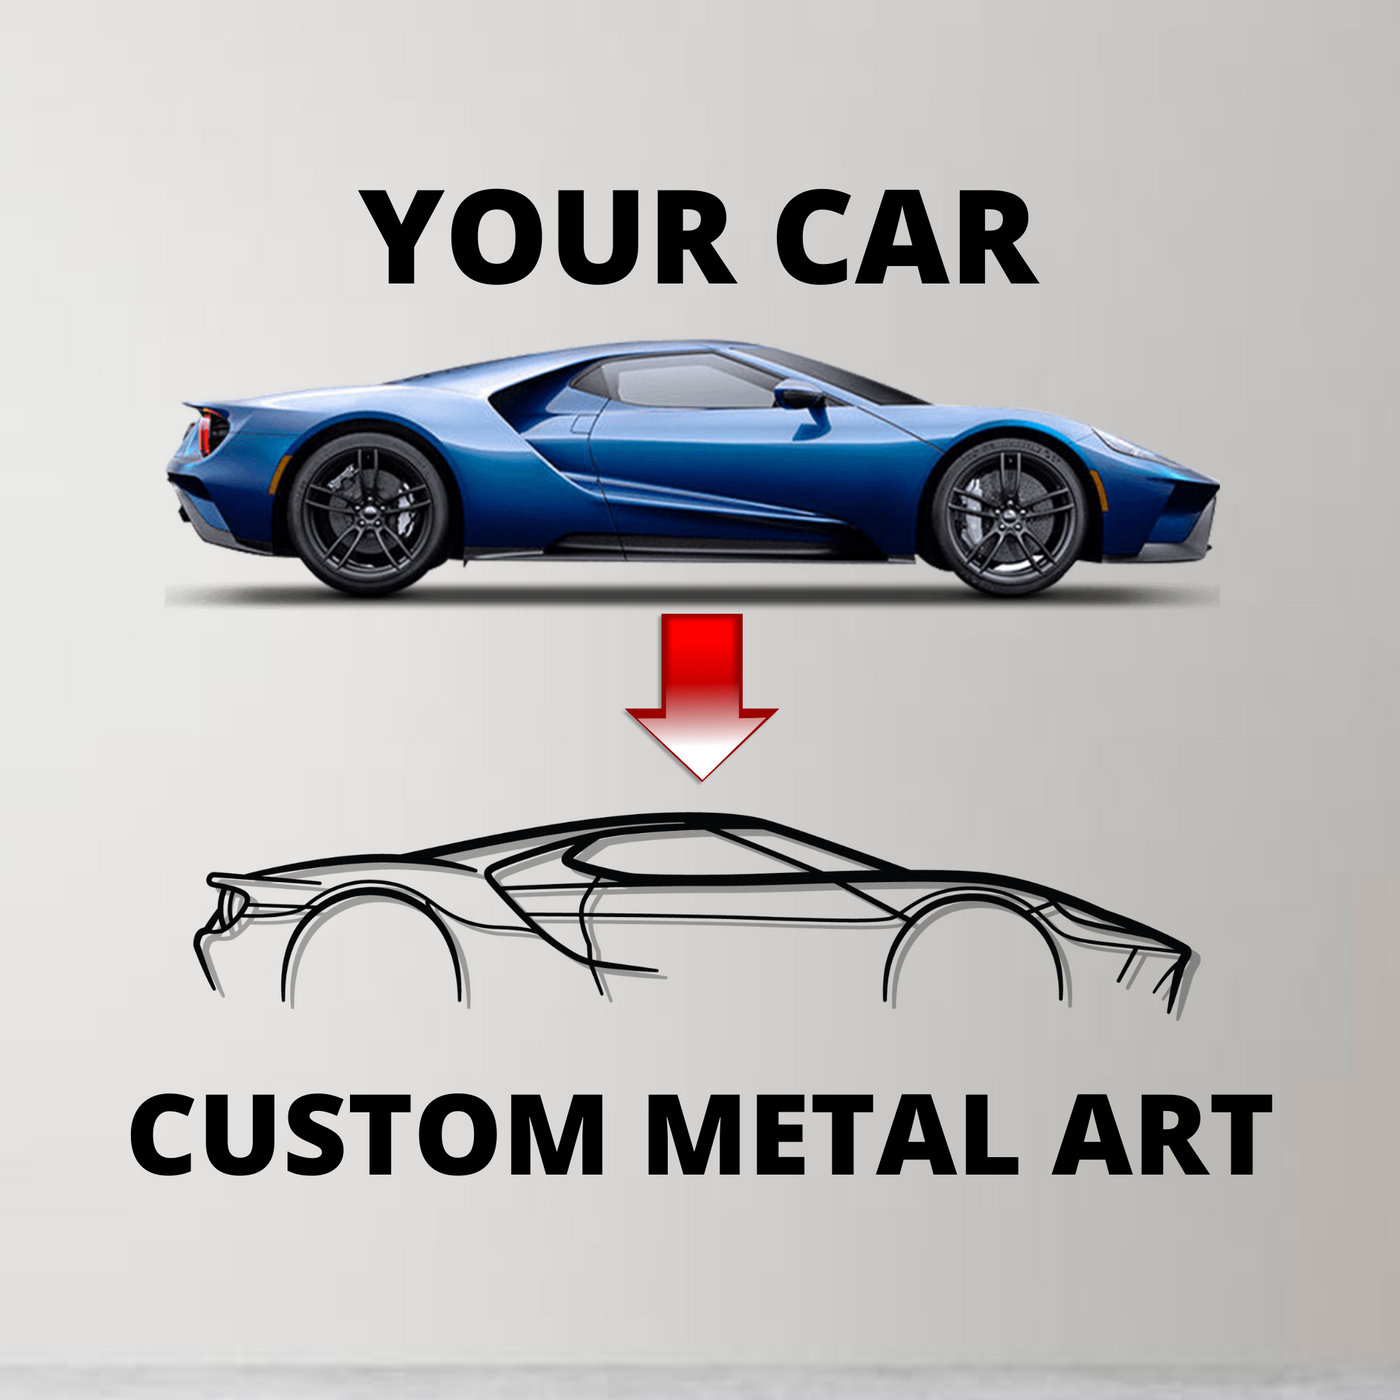 Camaro Z28 Detailed Silhouette Metal Wall Art